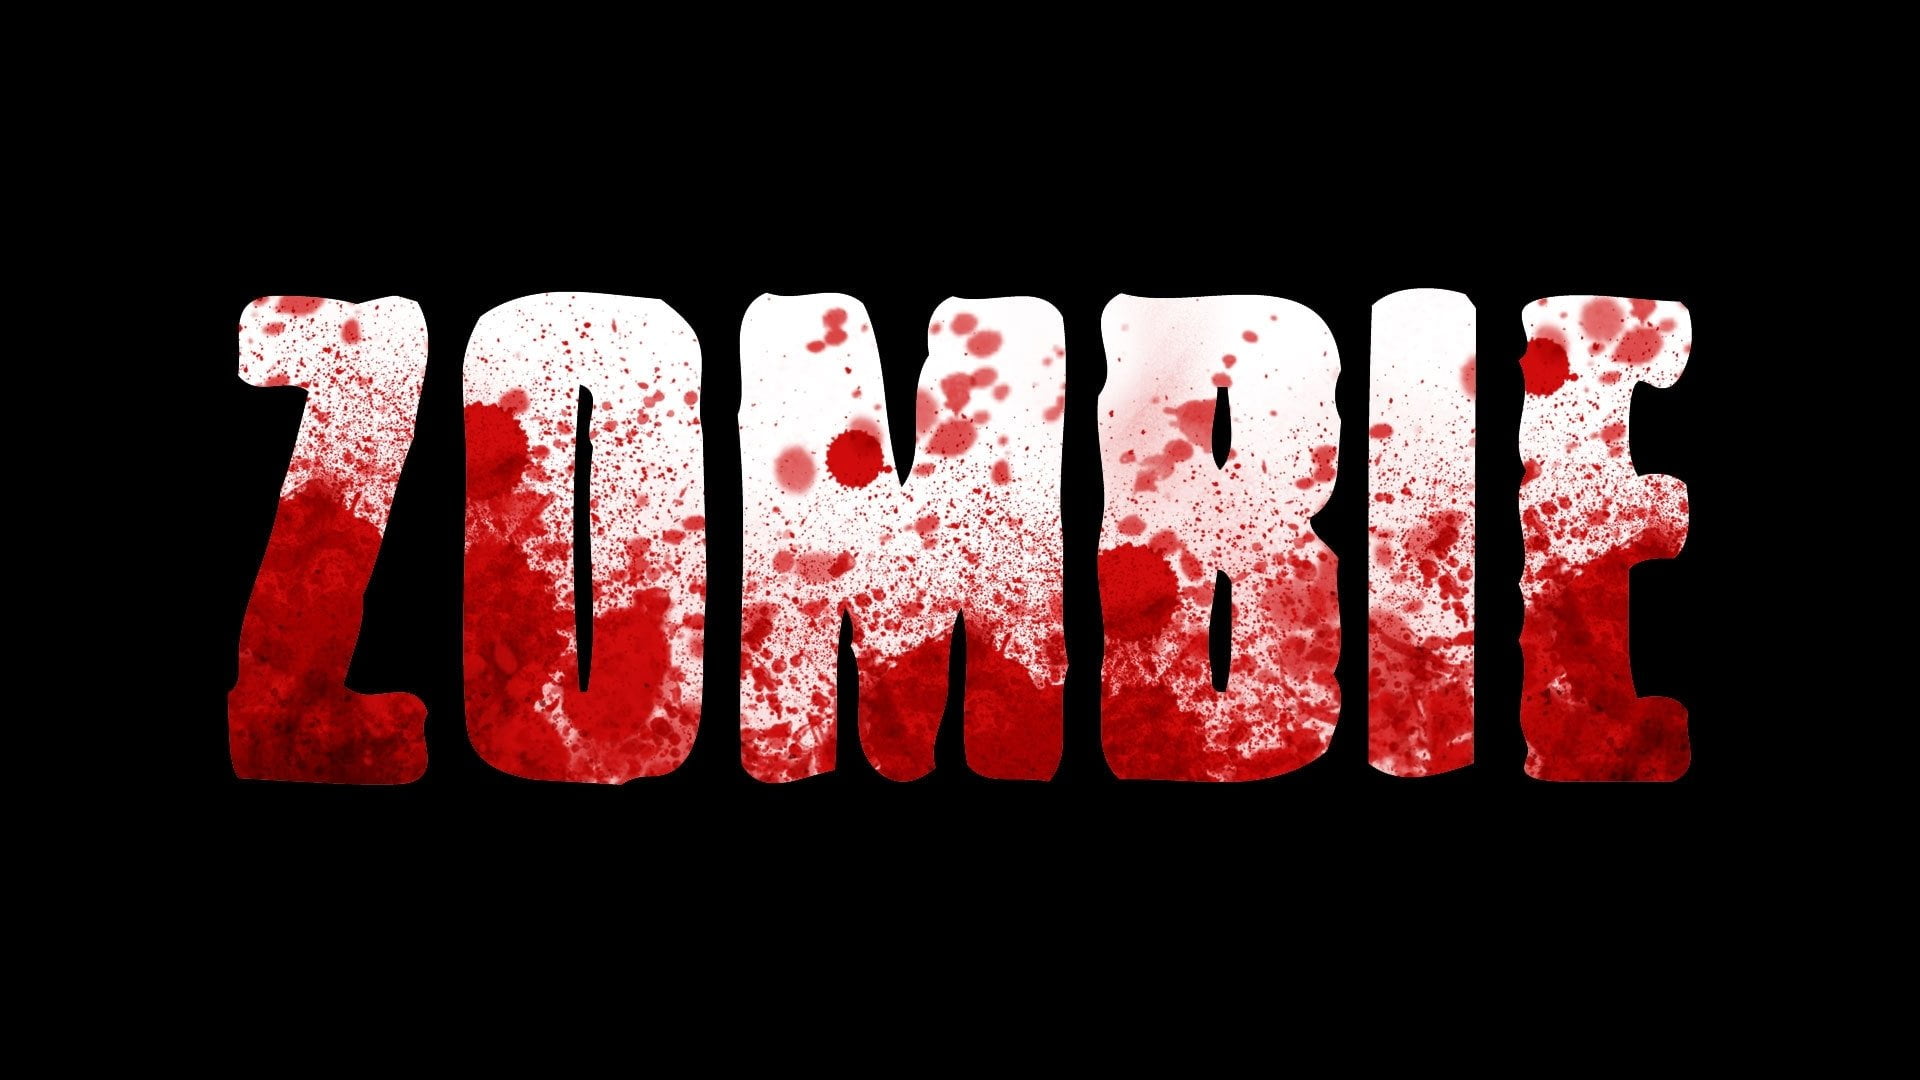 red and white zombie text, Dark, black background, studio shot